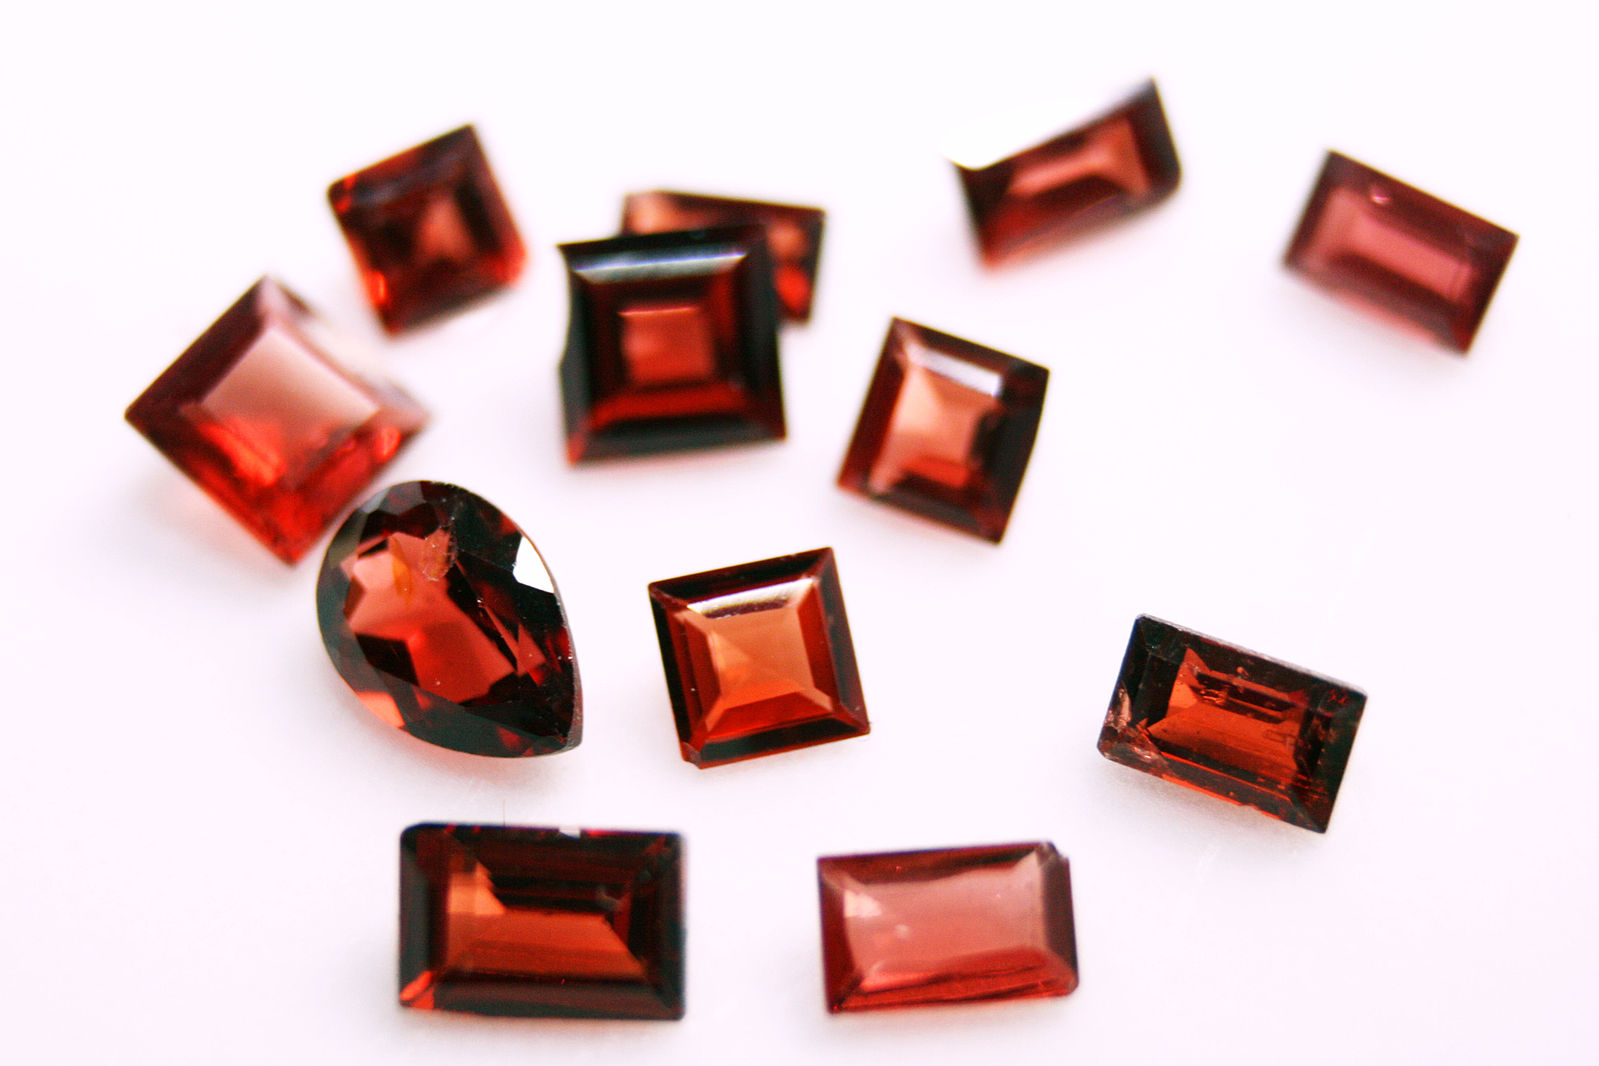 deep red garnet gemstones in princess, emerald and teardrop cuts